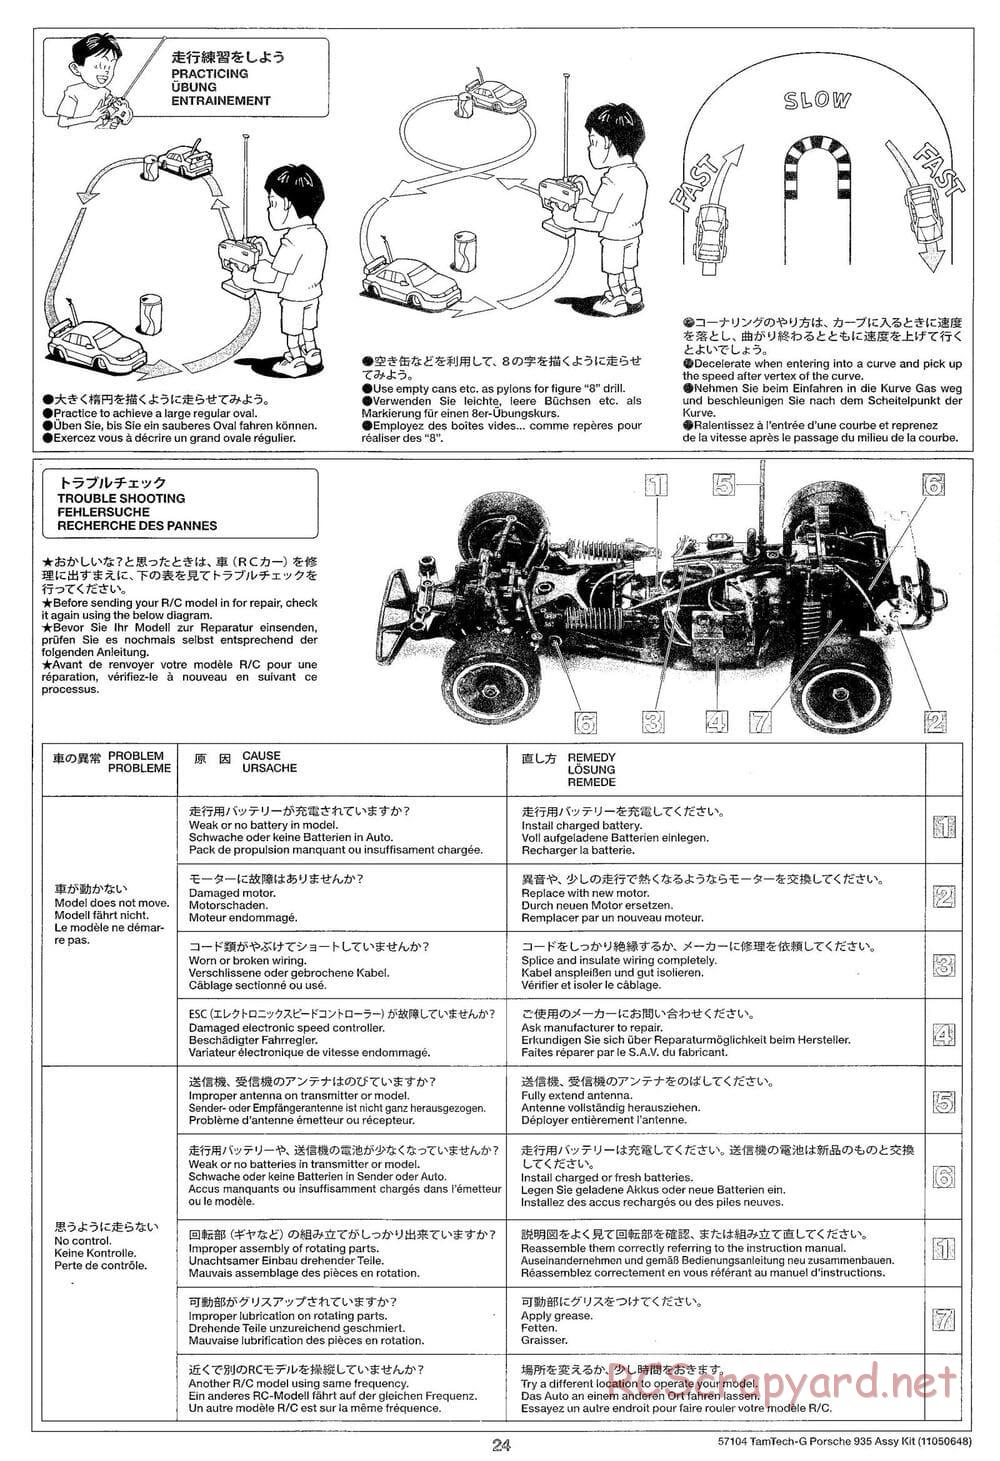 Tamiya - Porsche 935 Martini - GT-01 Chassis - Manual - Page 24